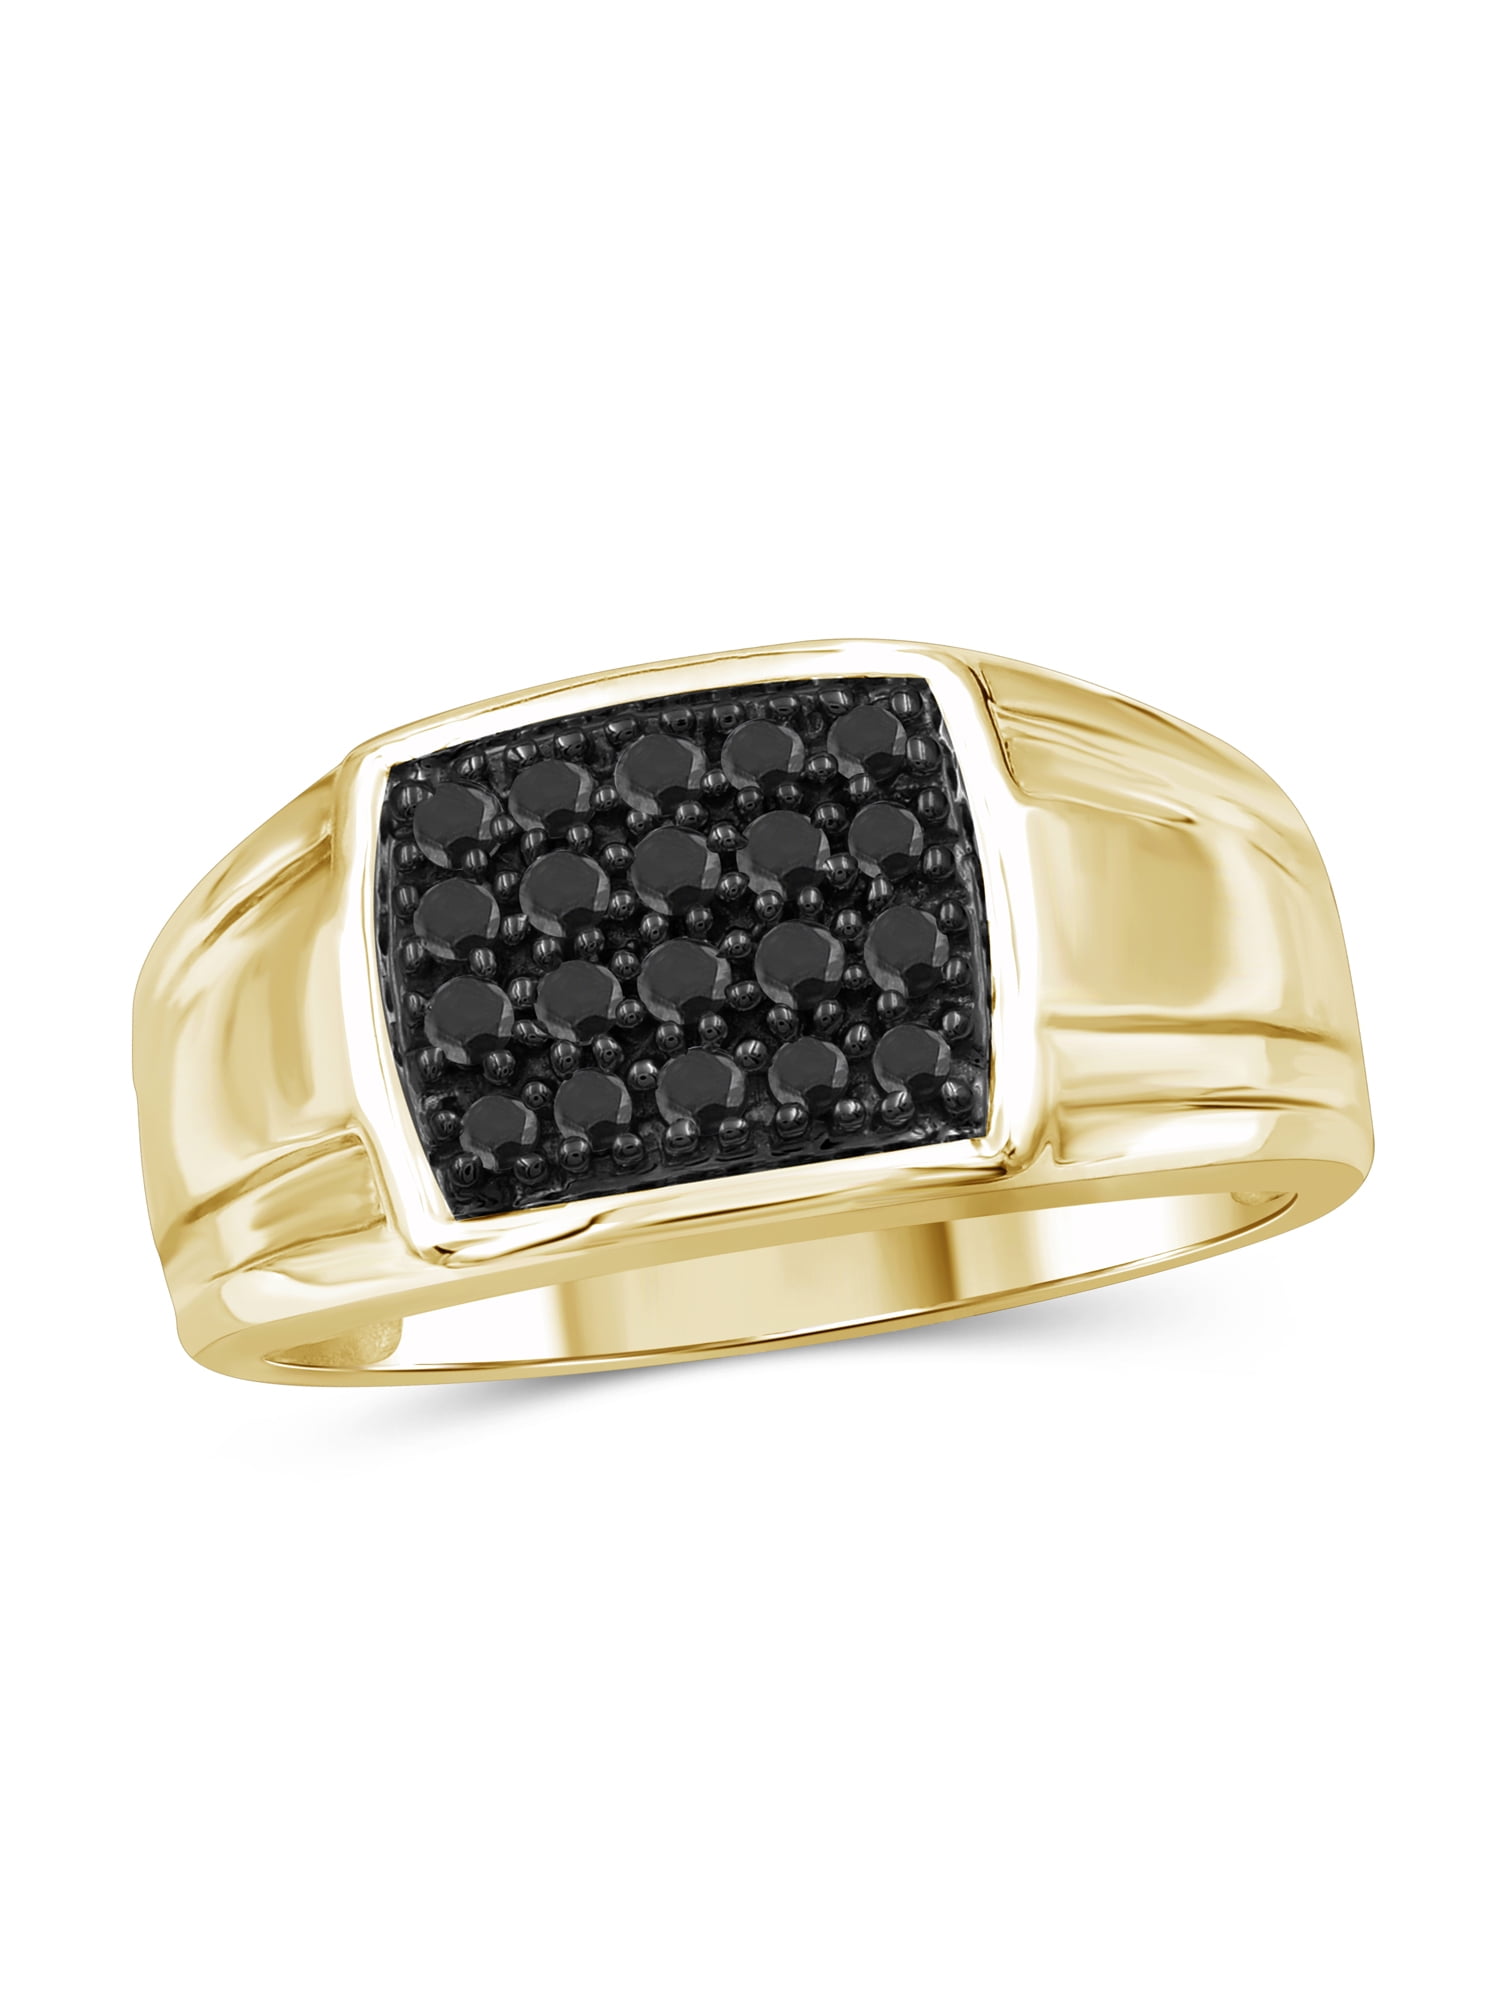 1/2 Carat T.W. Black Diamond 14k Gold Over Silver Men's Ring - Walmart.com